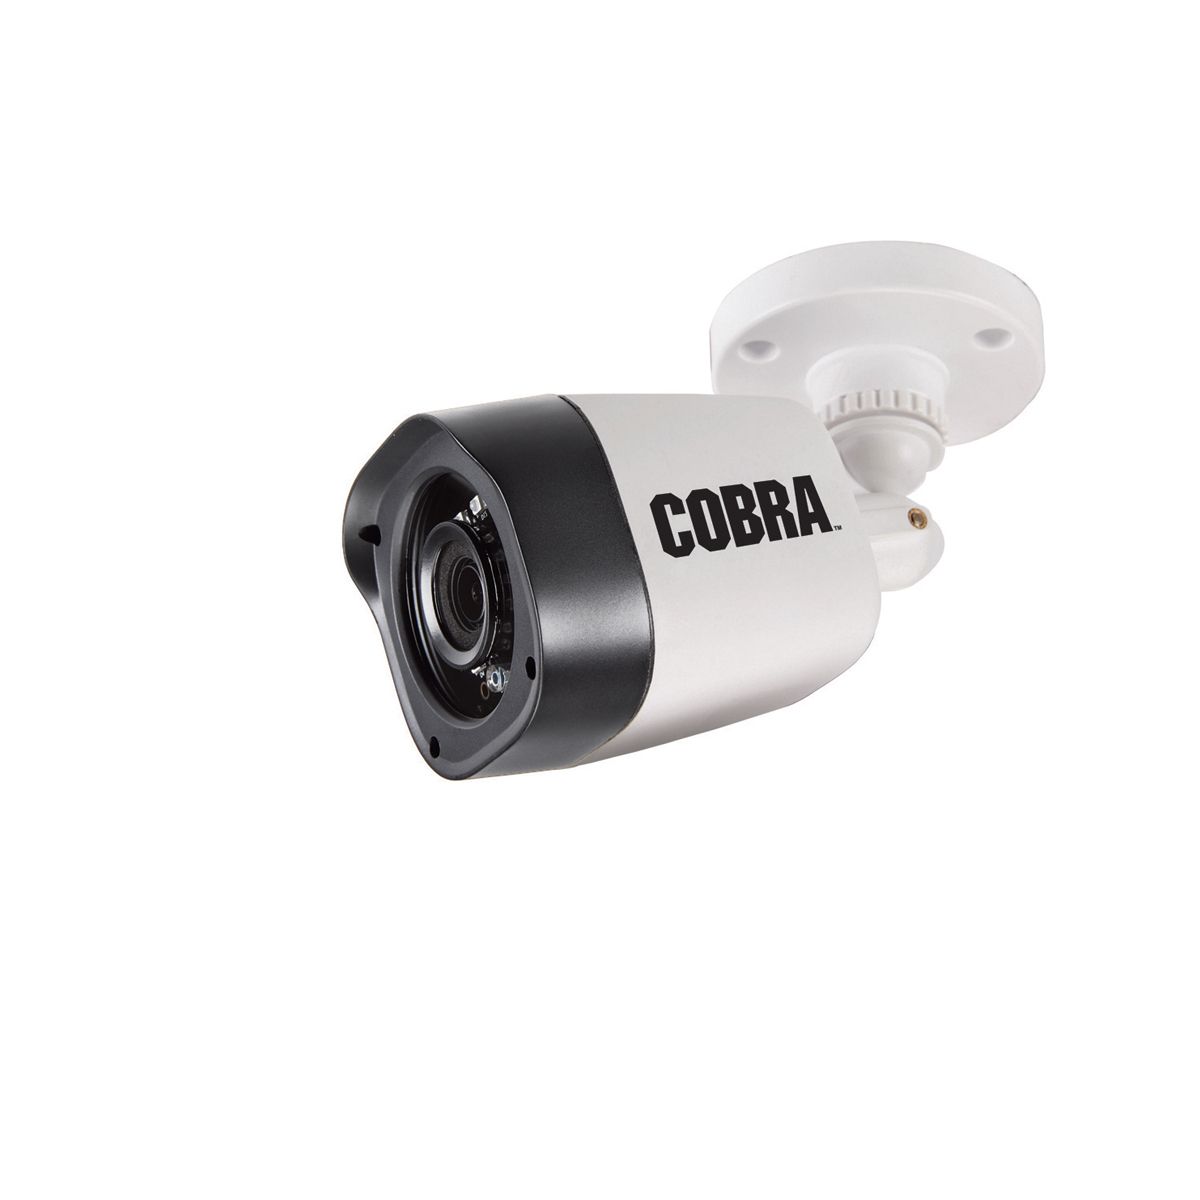 COBRA HD Color Surveillance DVR Camera with Night Vision